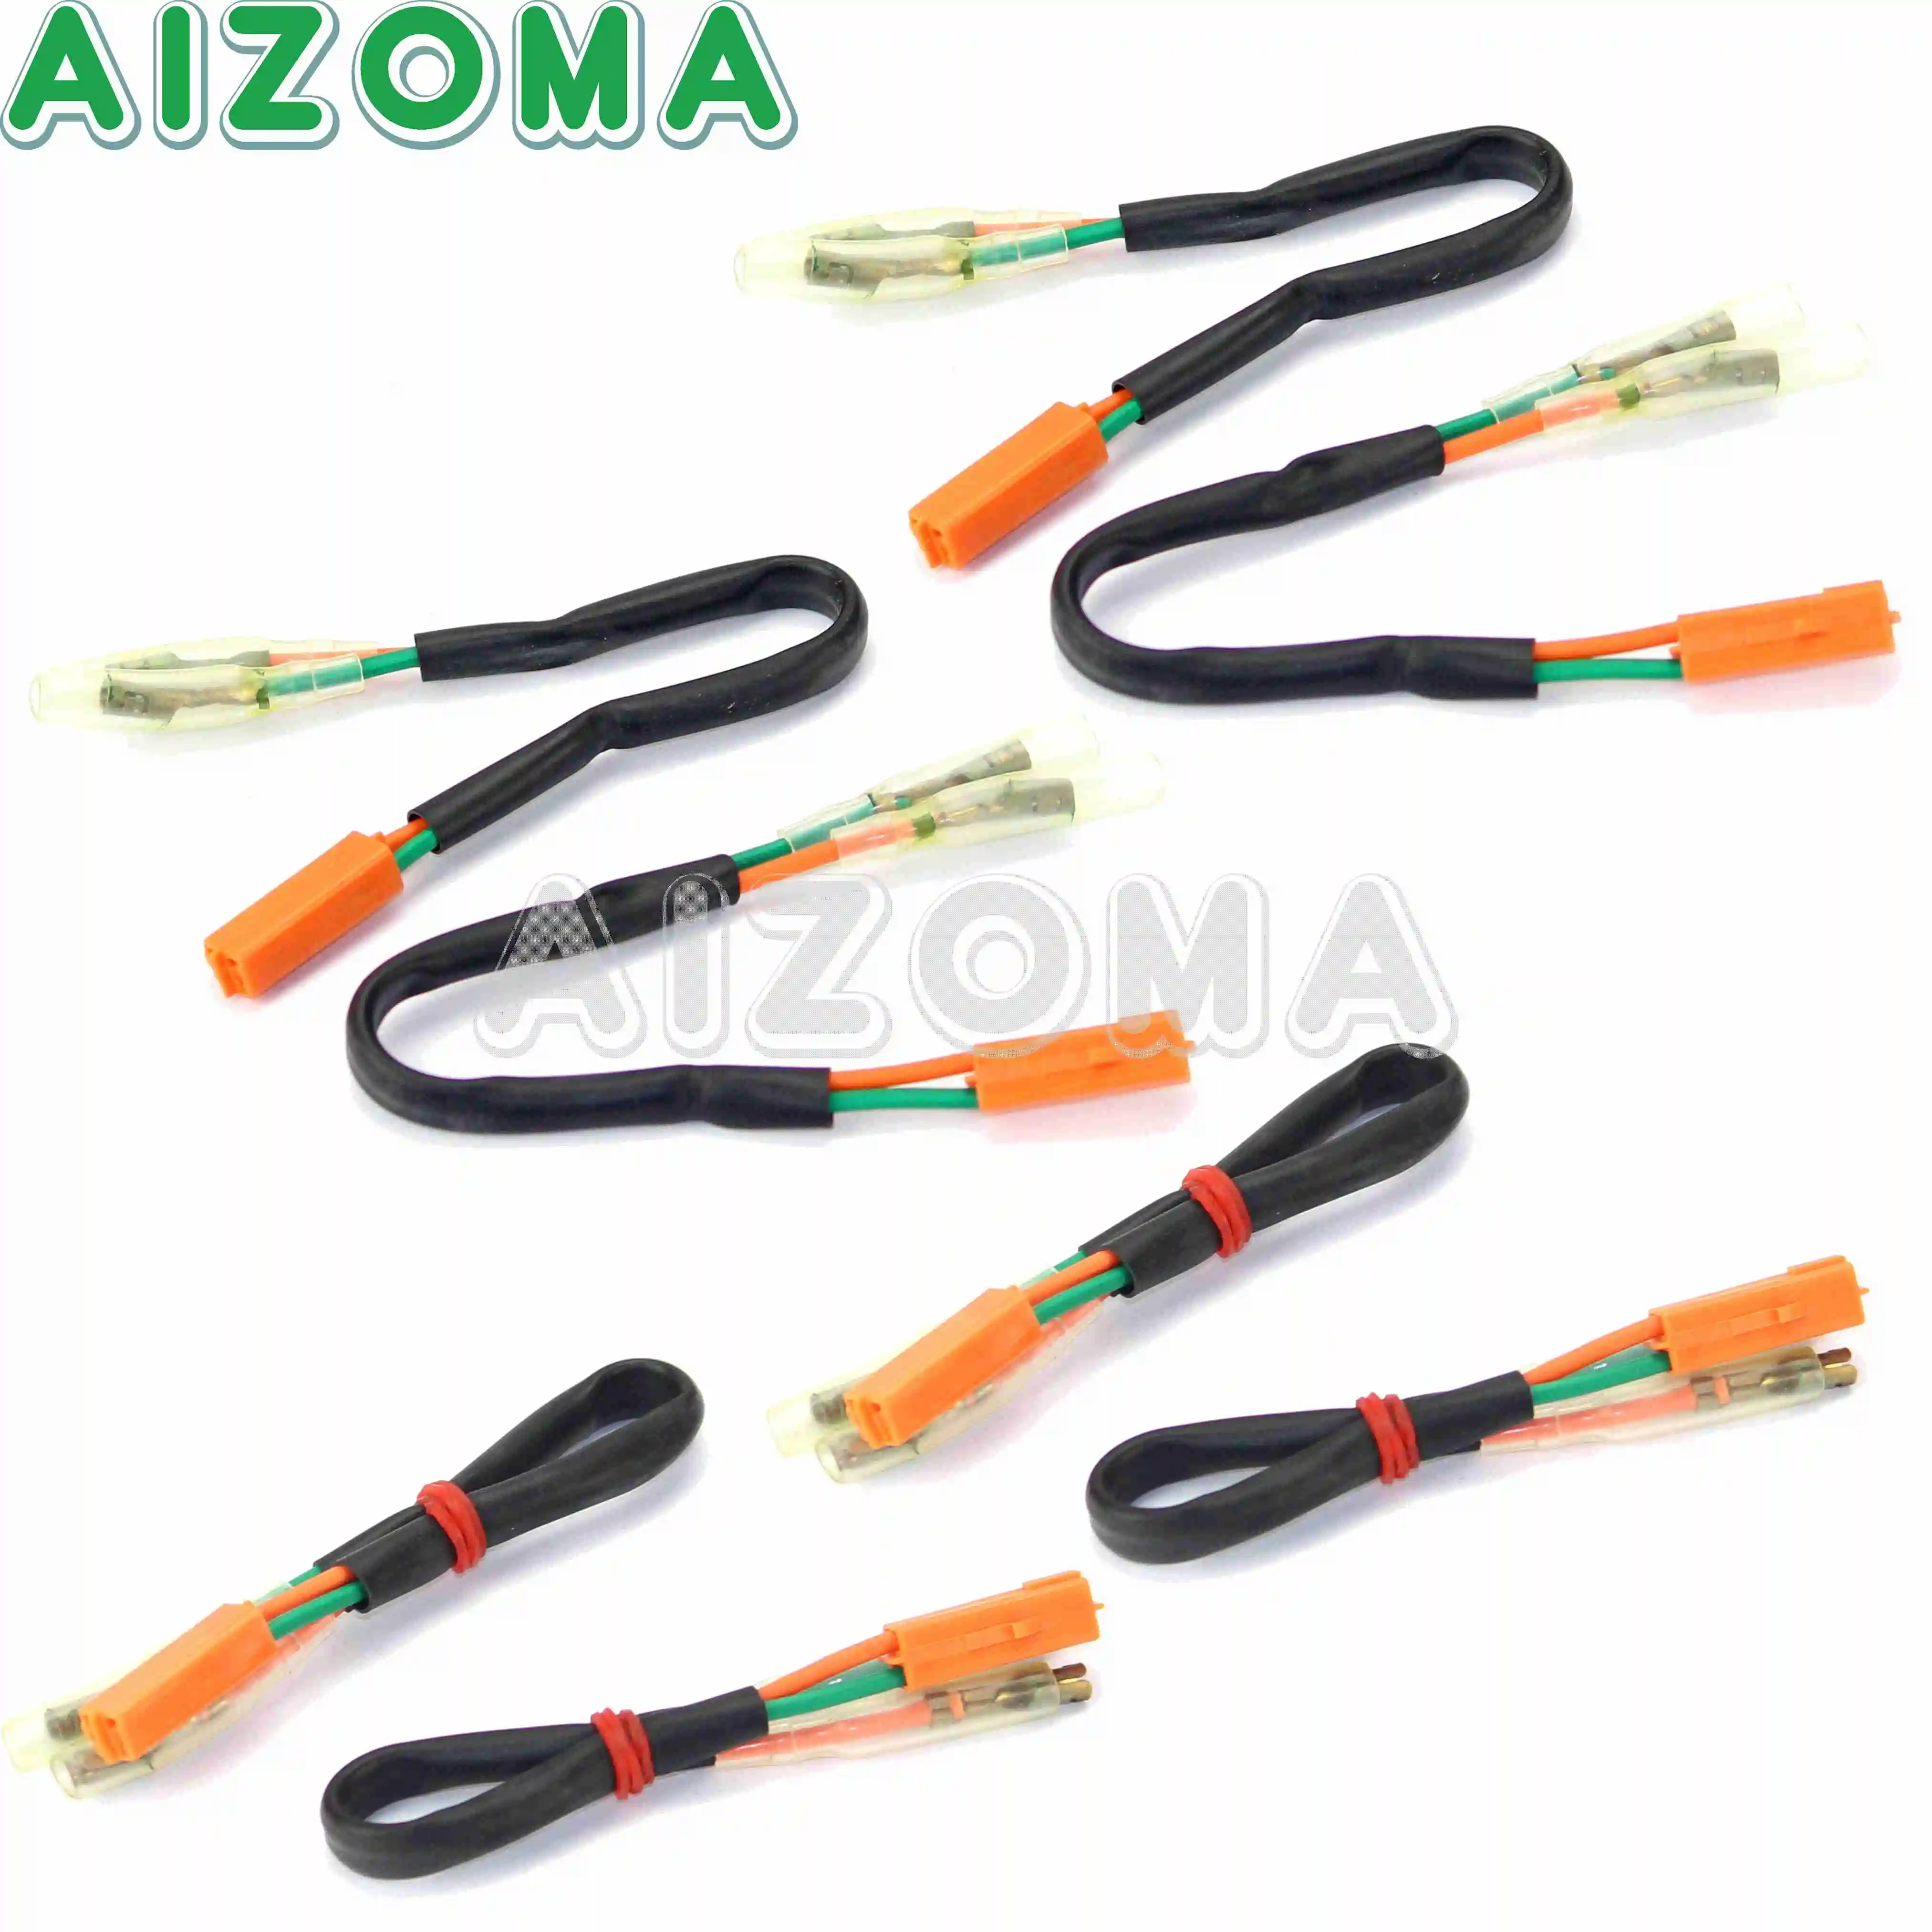 

8X/4X/2X Turn Signal Marker Wire Adapters Plug Connectors Wiring Adapter for Honda CBR600F4 CBR900RR CBR929RR VT750 VTZ CBR F4I